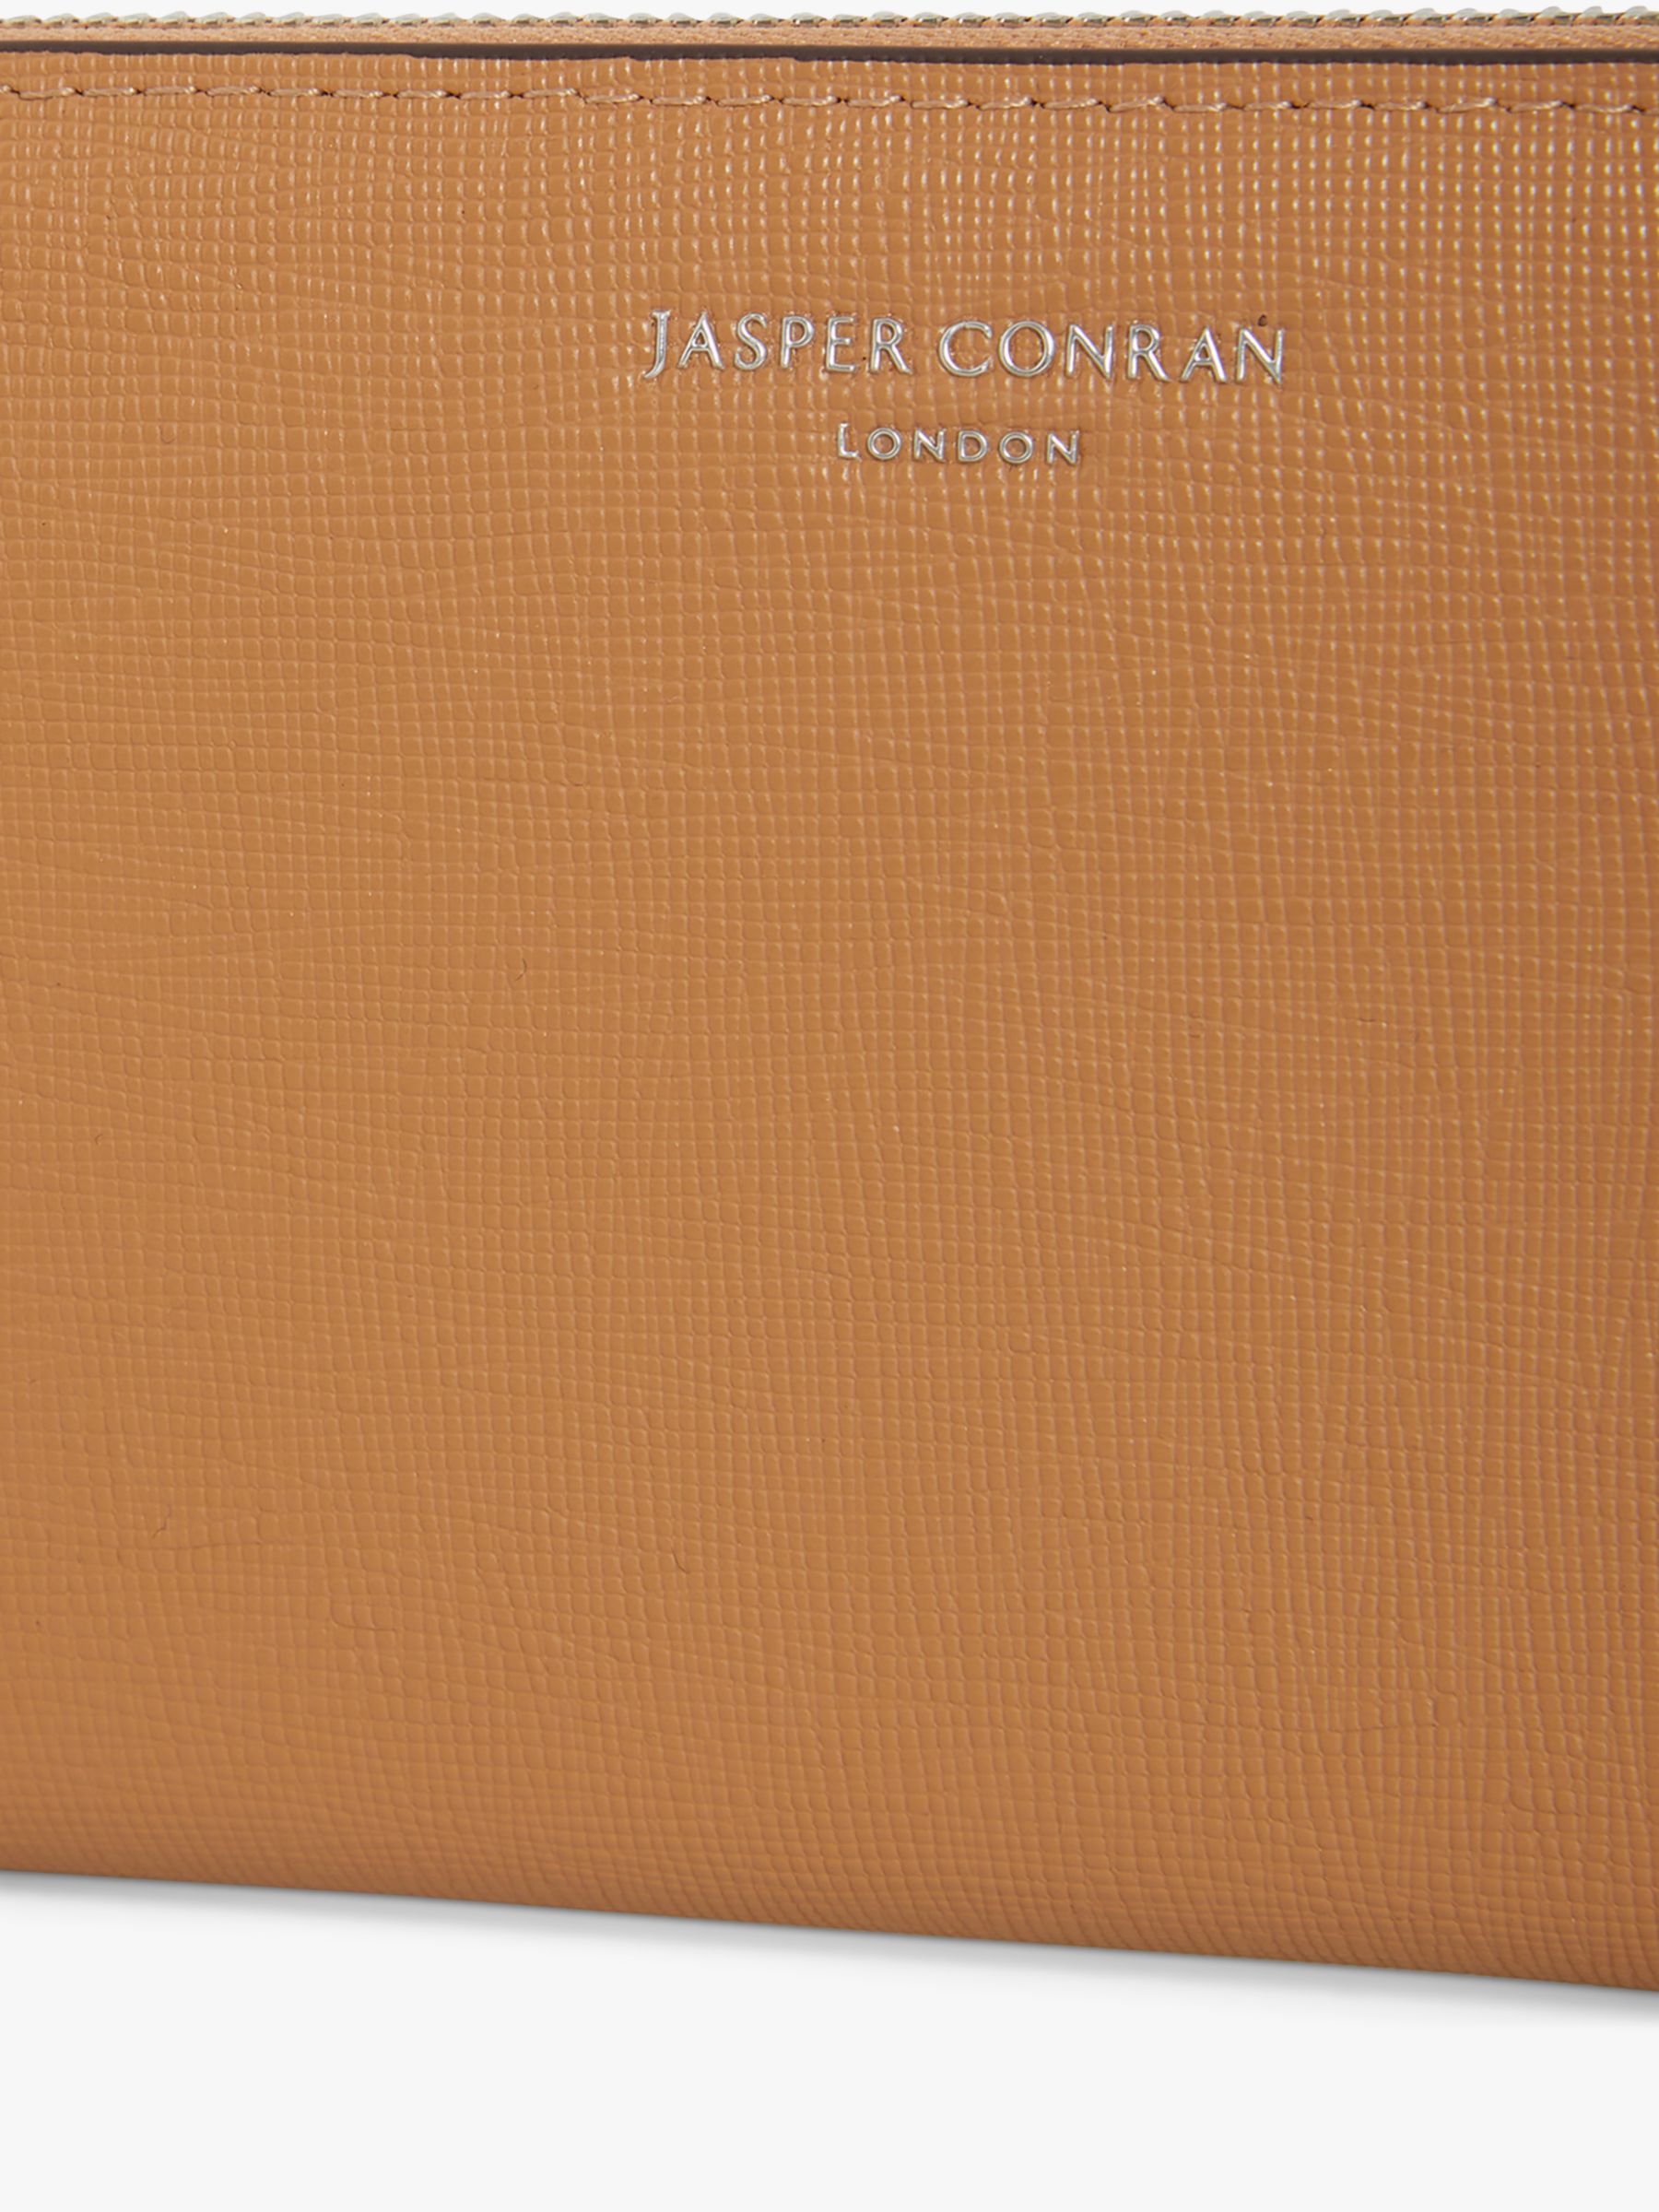 Buy Jasper Conran London Bee Large Cross Hatch Leather Purse, Camel Online at johnlewis.com